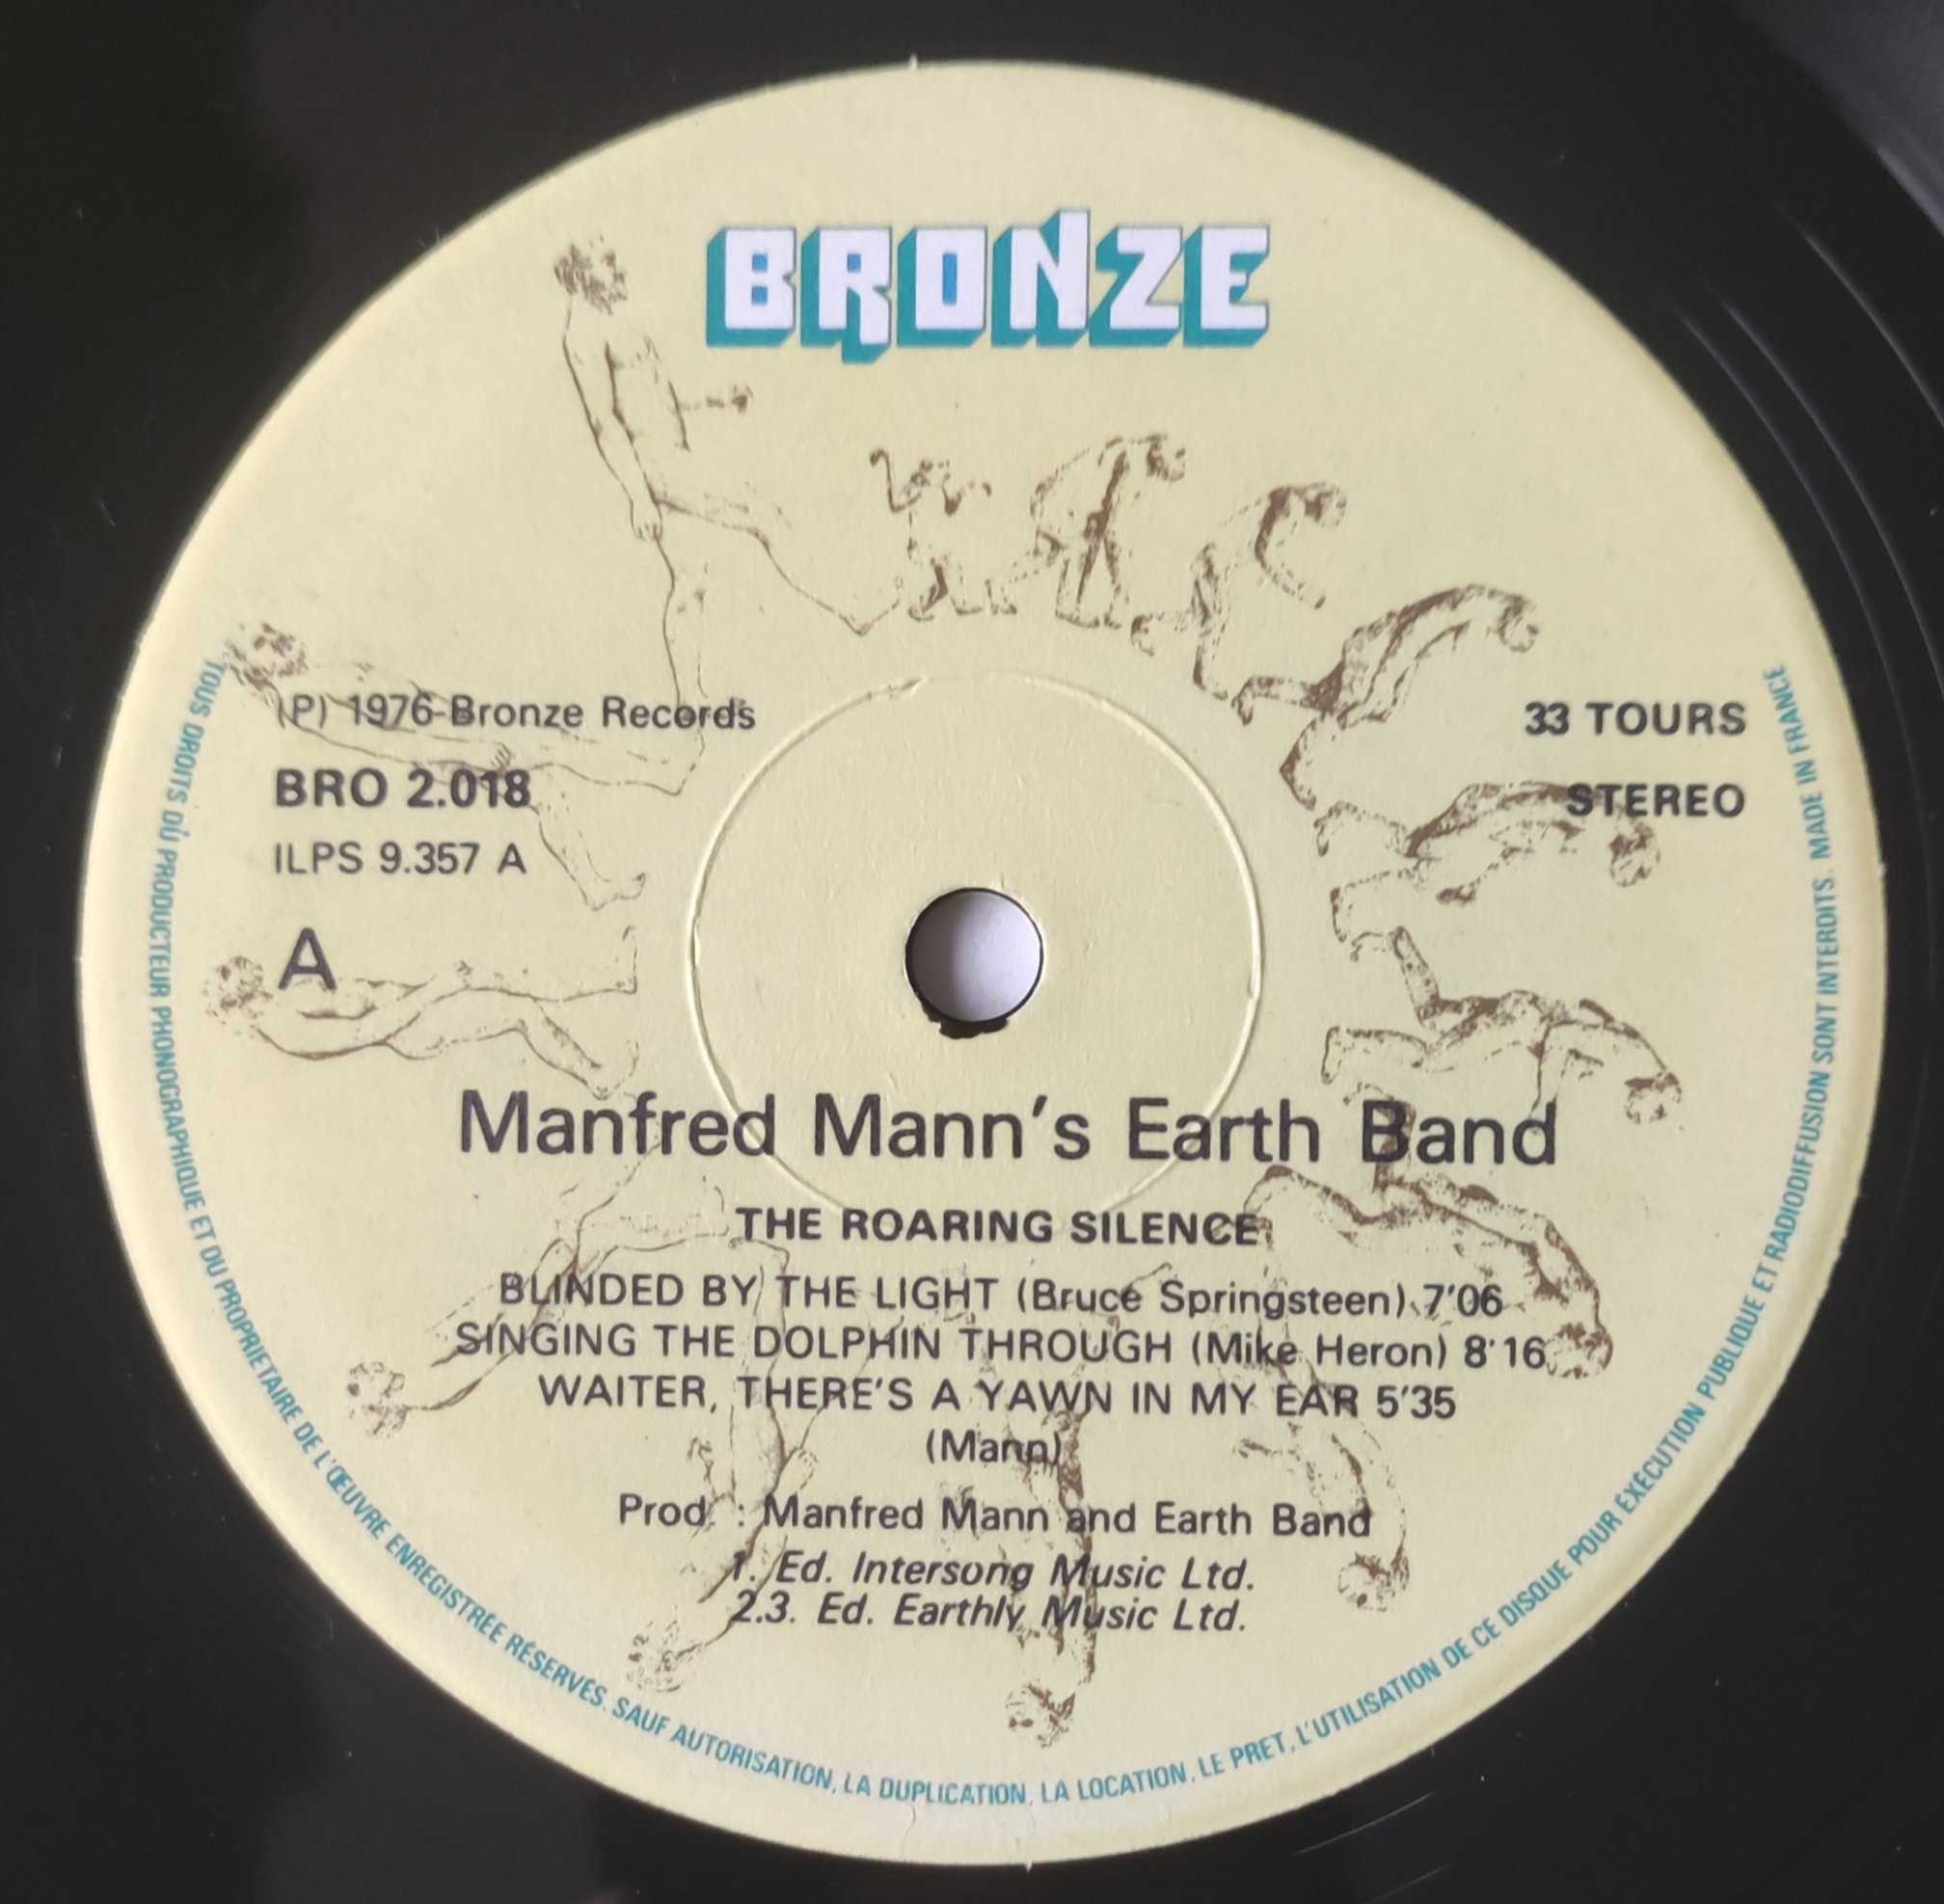 MANFRED MANN'S EARTH BAND - The roaring silence - 1976 - France - Bronze -  Vinyle - 33 Tours - OriginVinylStore - OriginVinylStore